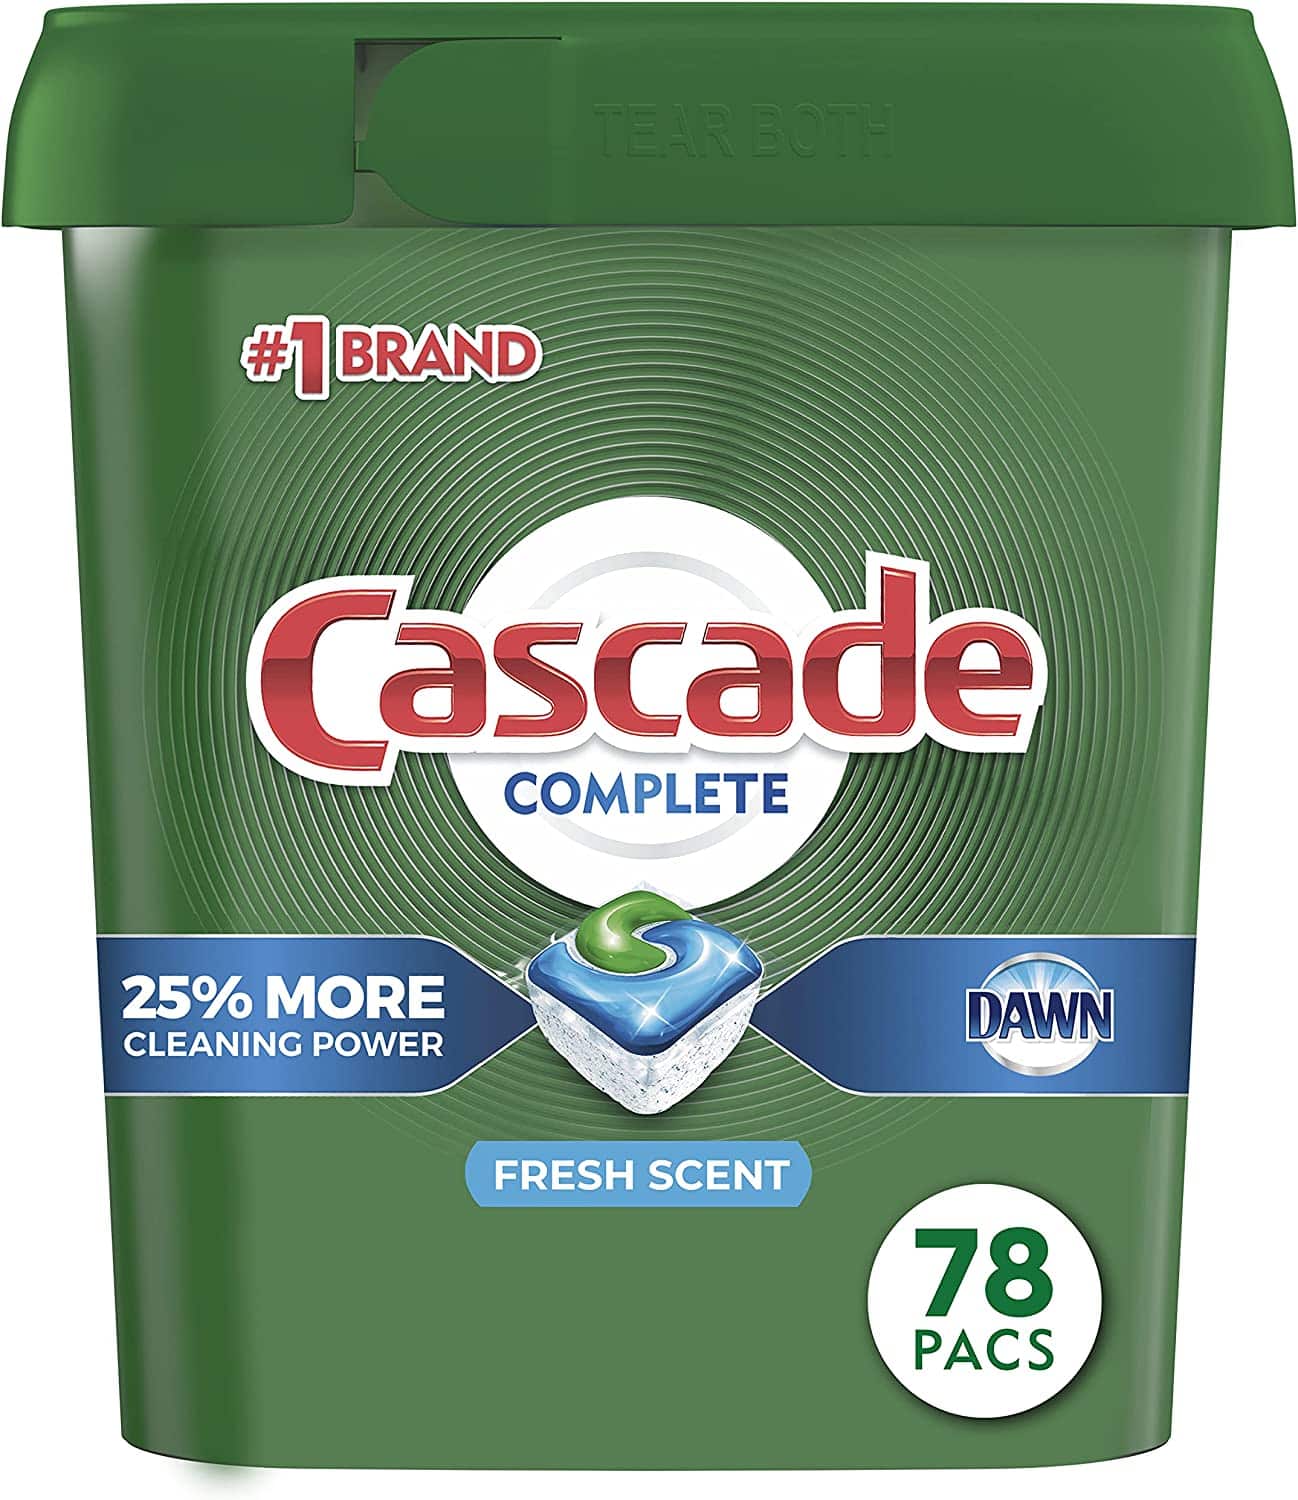 Cascade Complete Dishwasher Pods Logo